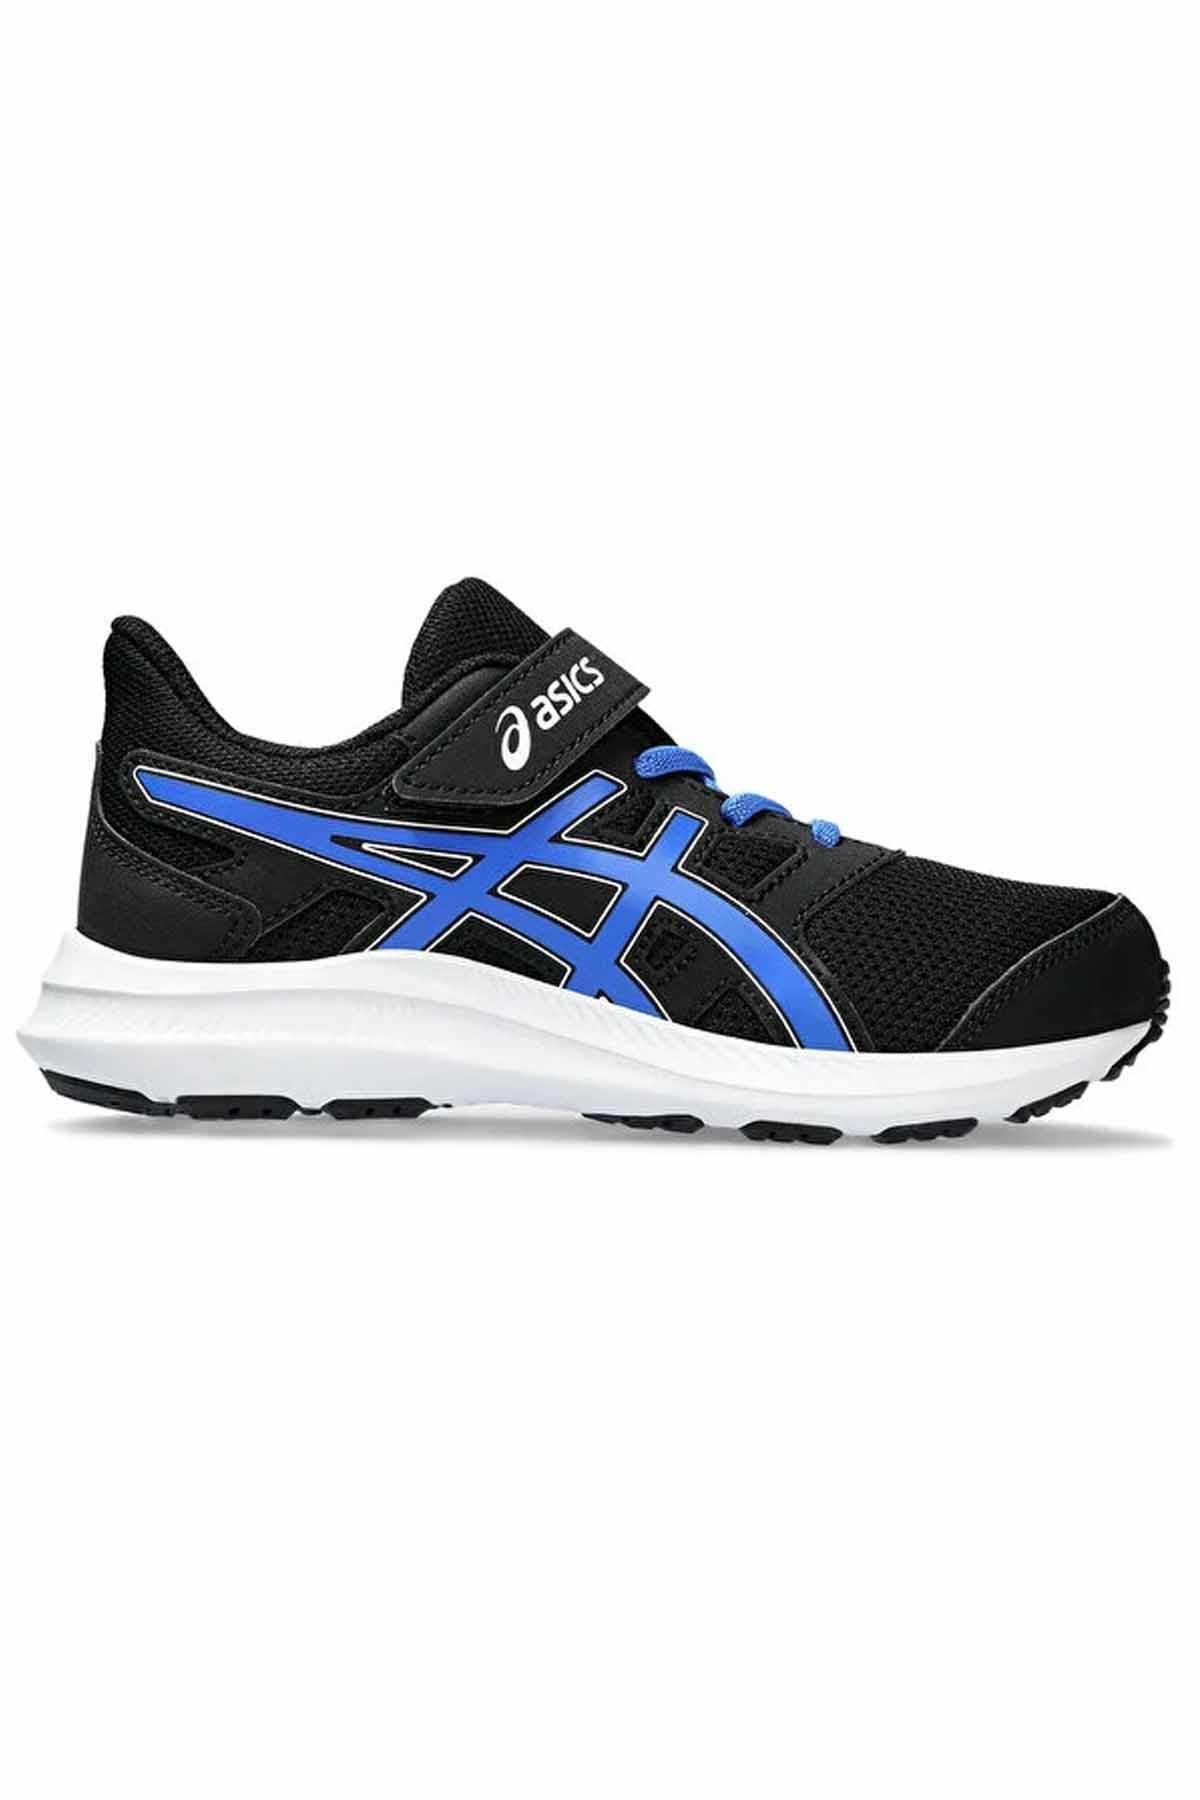 Asics Jolt 4 Ps Çocuk Yürüyüş Koşu Ayakkabı 1014a299-005siyah/mavi